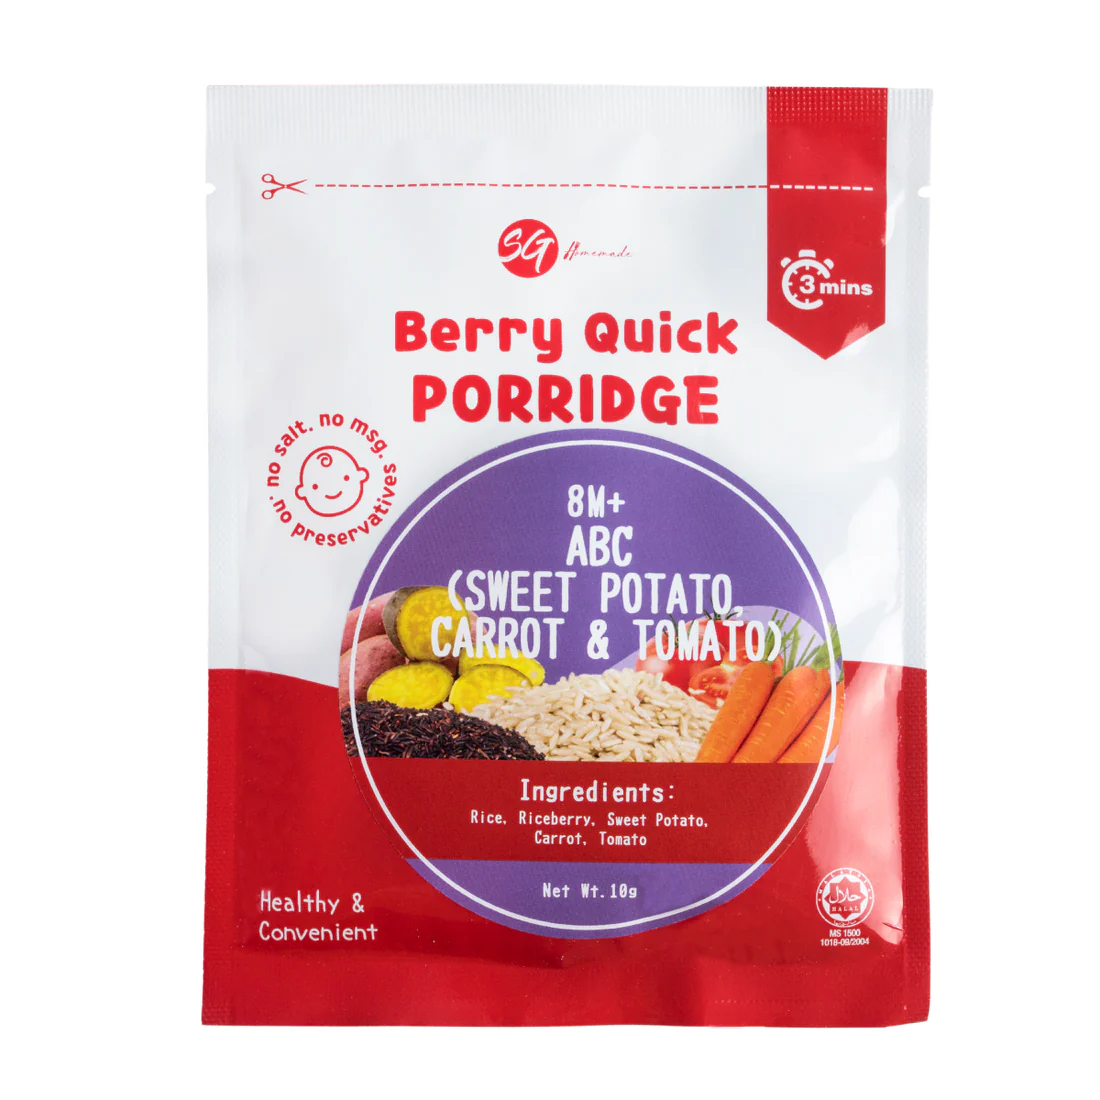 SG Homemade Berry Quick Porridge ABC